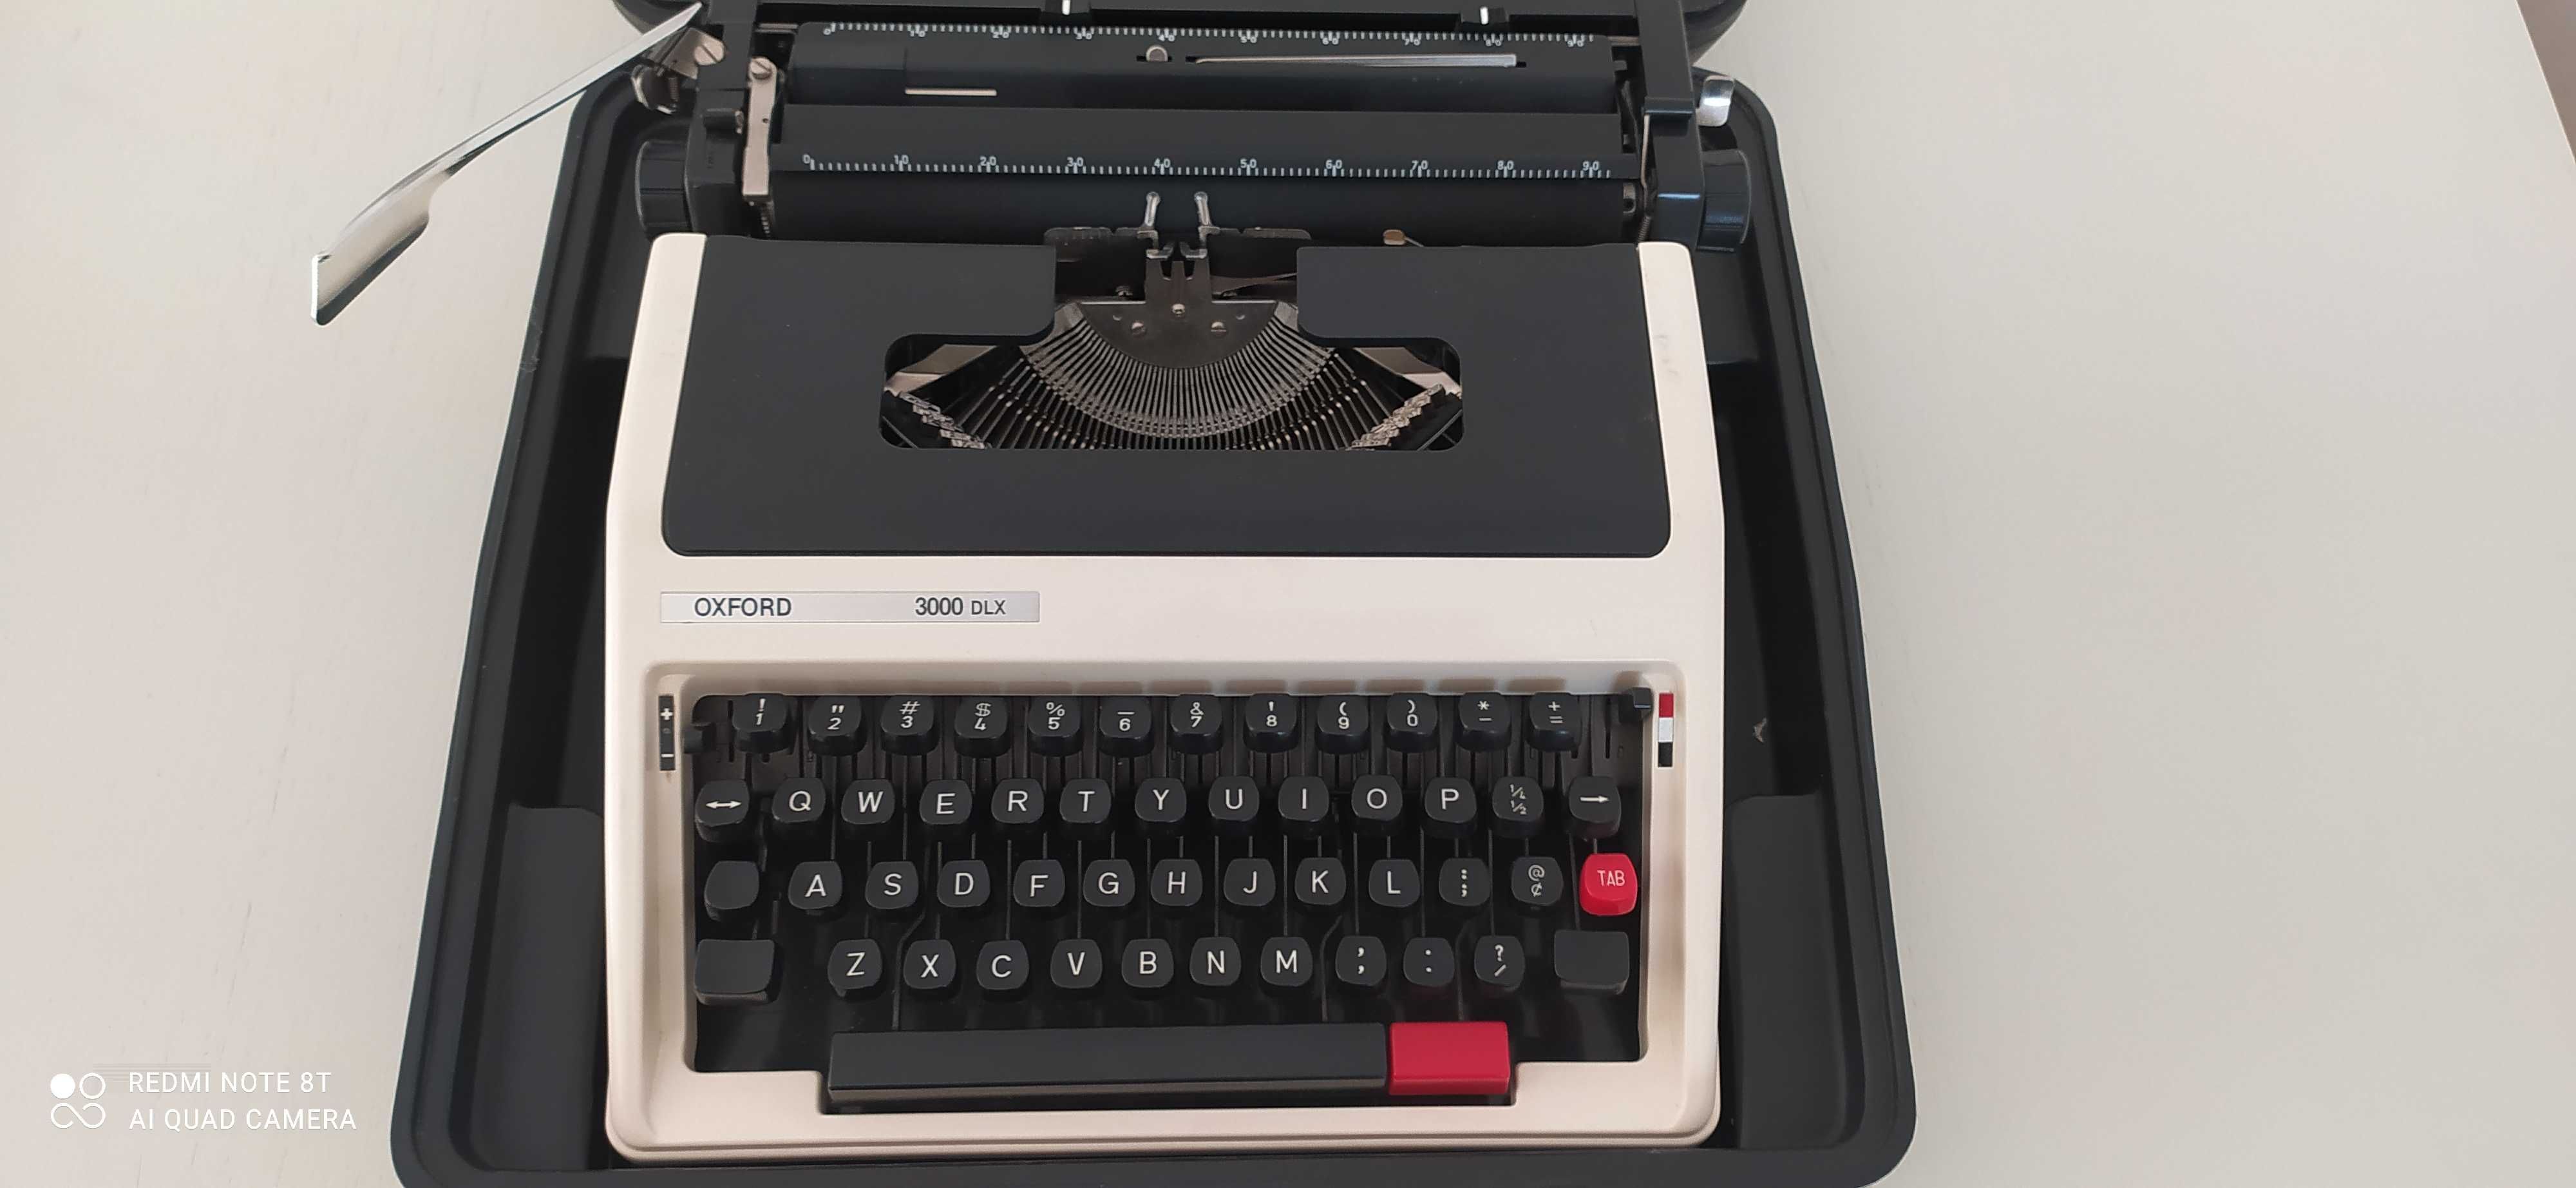 Masina de scris Oxford 3000 DLX